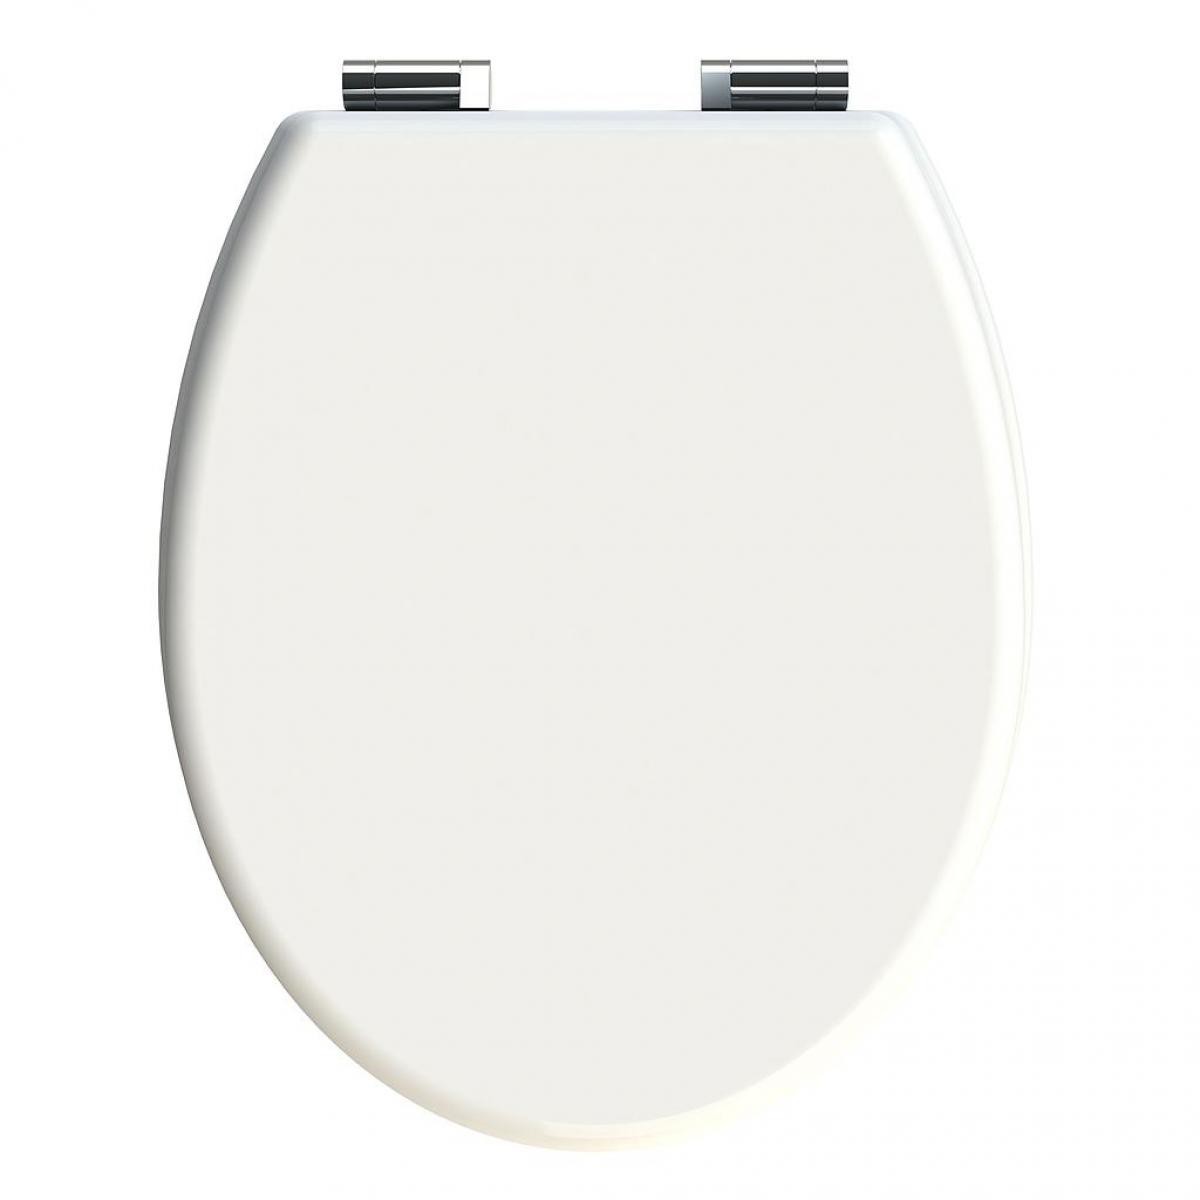 Allibert - Allibert - Abattant WC blanc brillant charnières métal chromé - CILENTO - Abattant WC